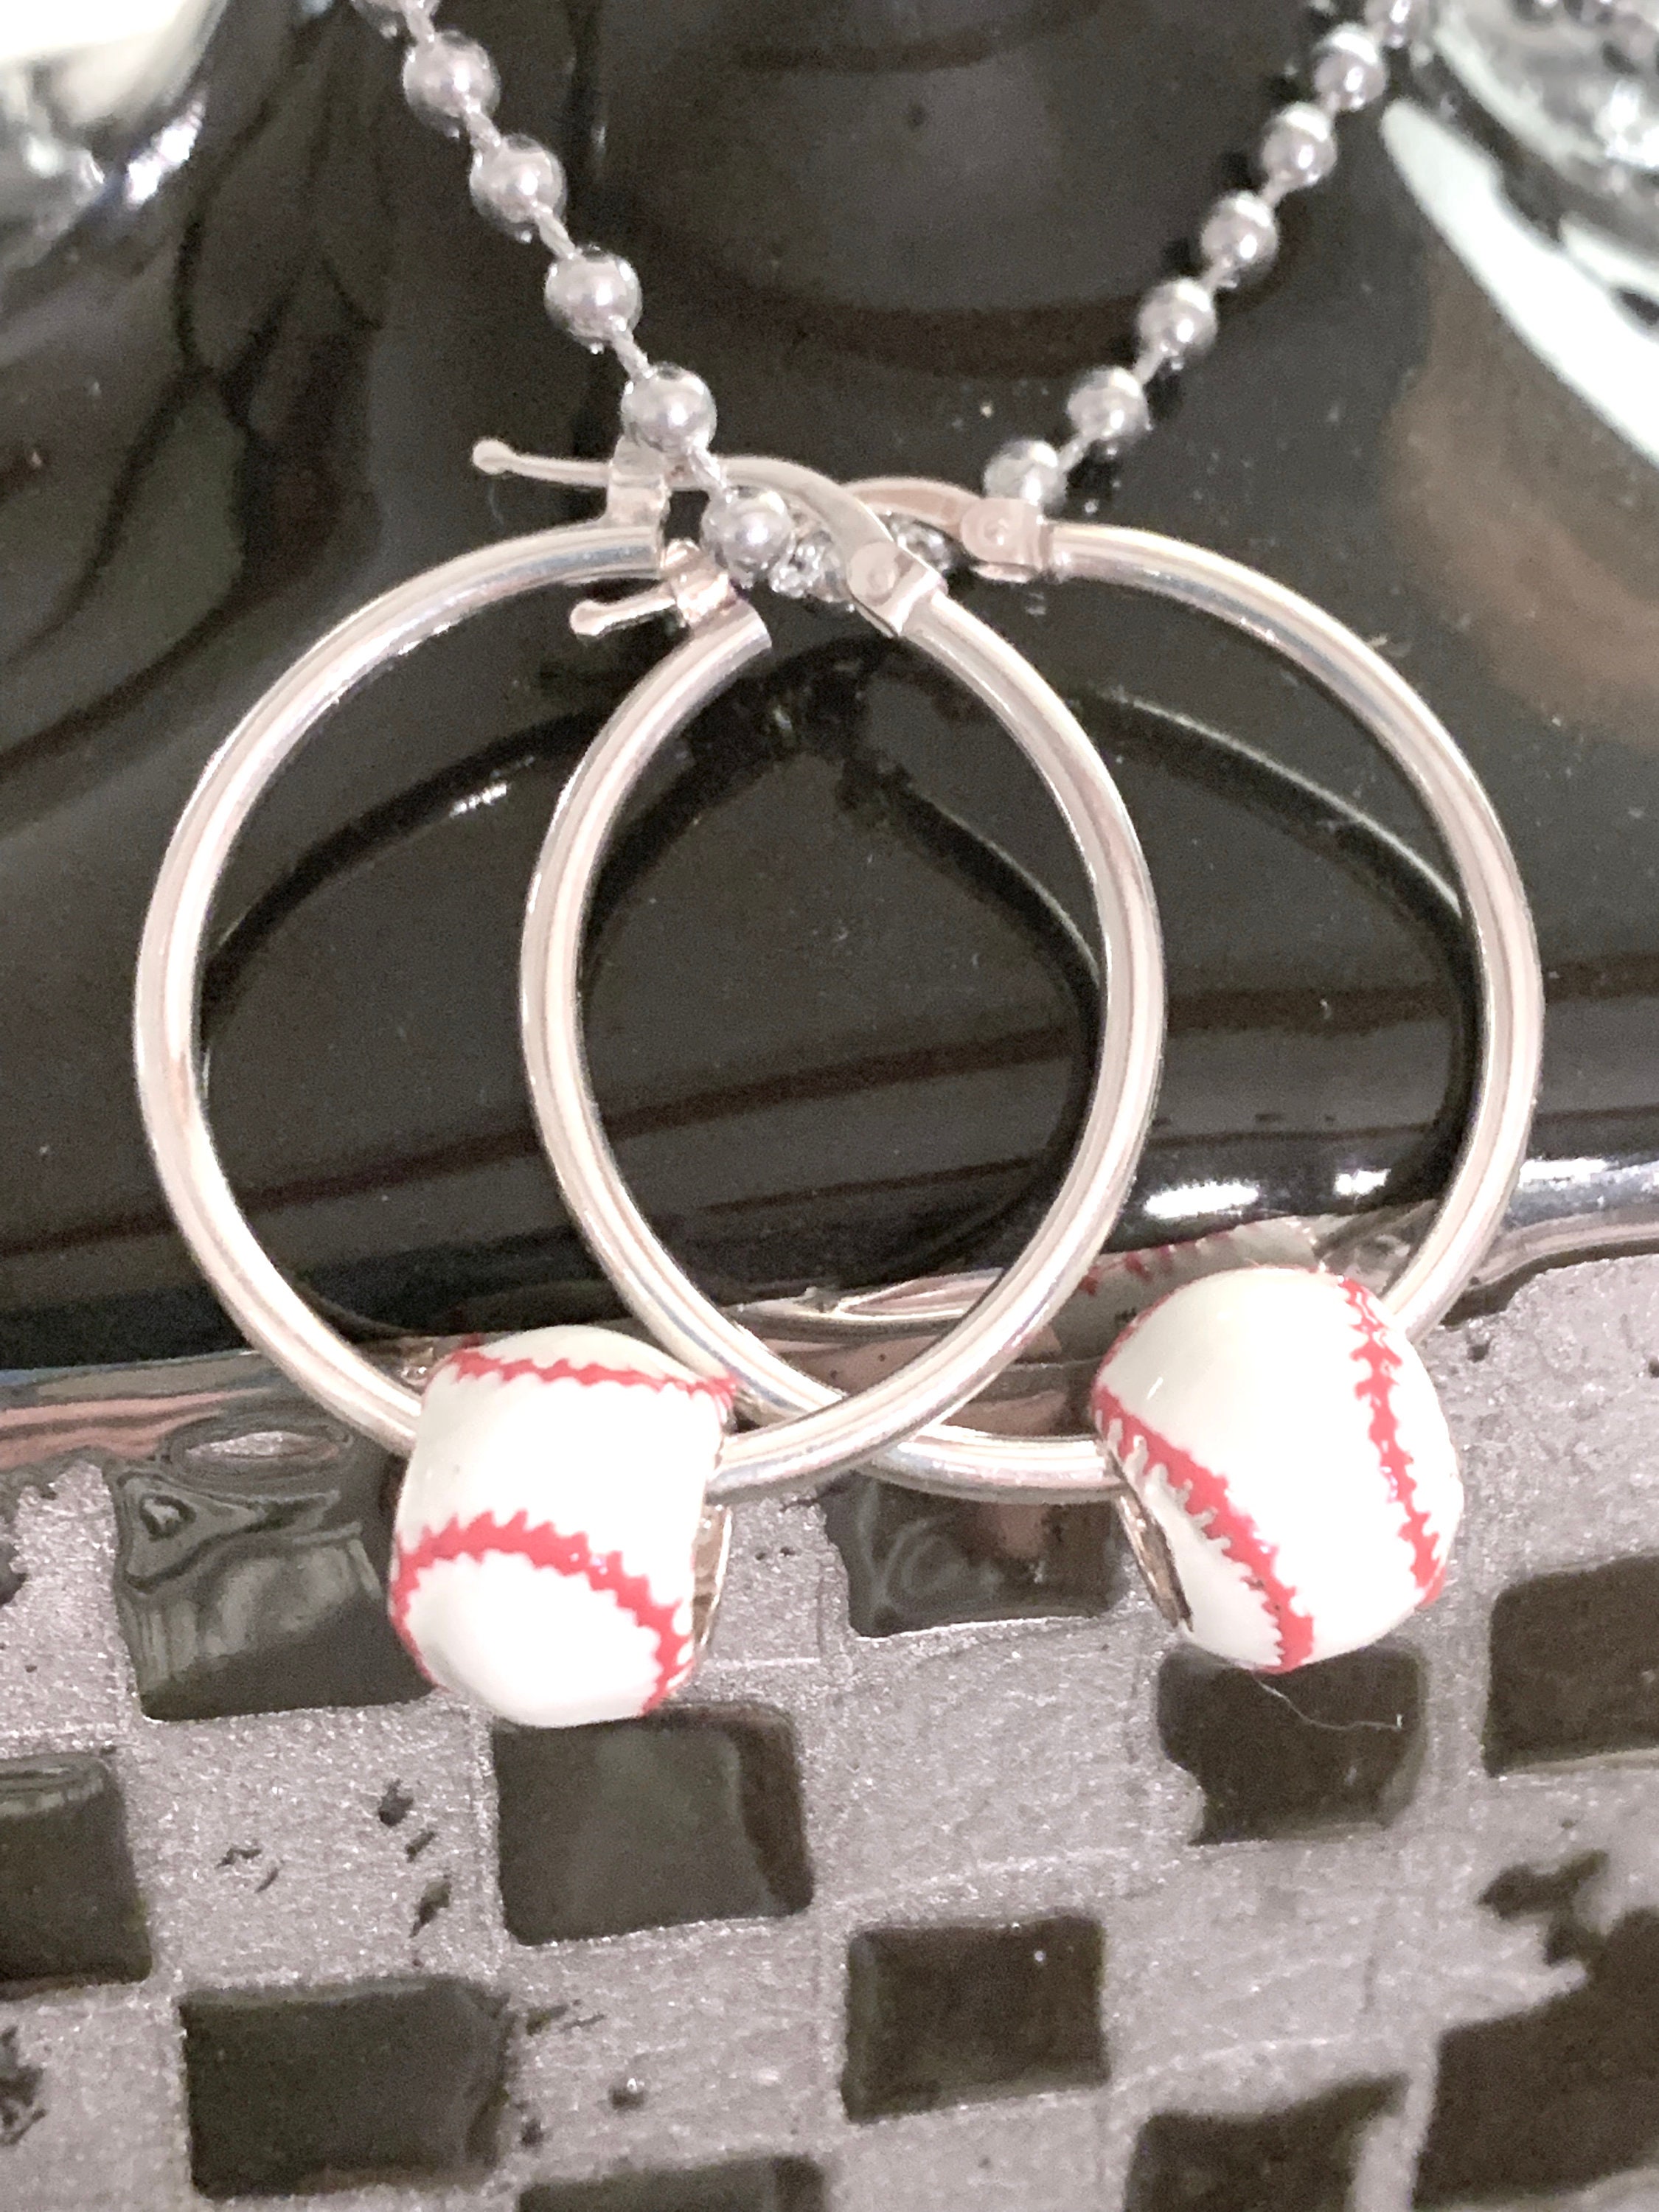  CC Sport Baseball Earrings - Silver : Sports & Outdoors